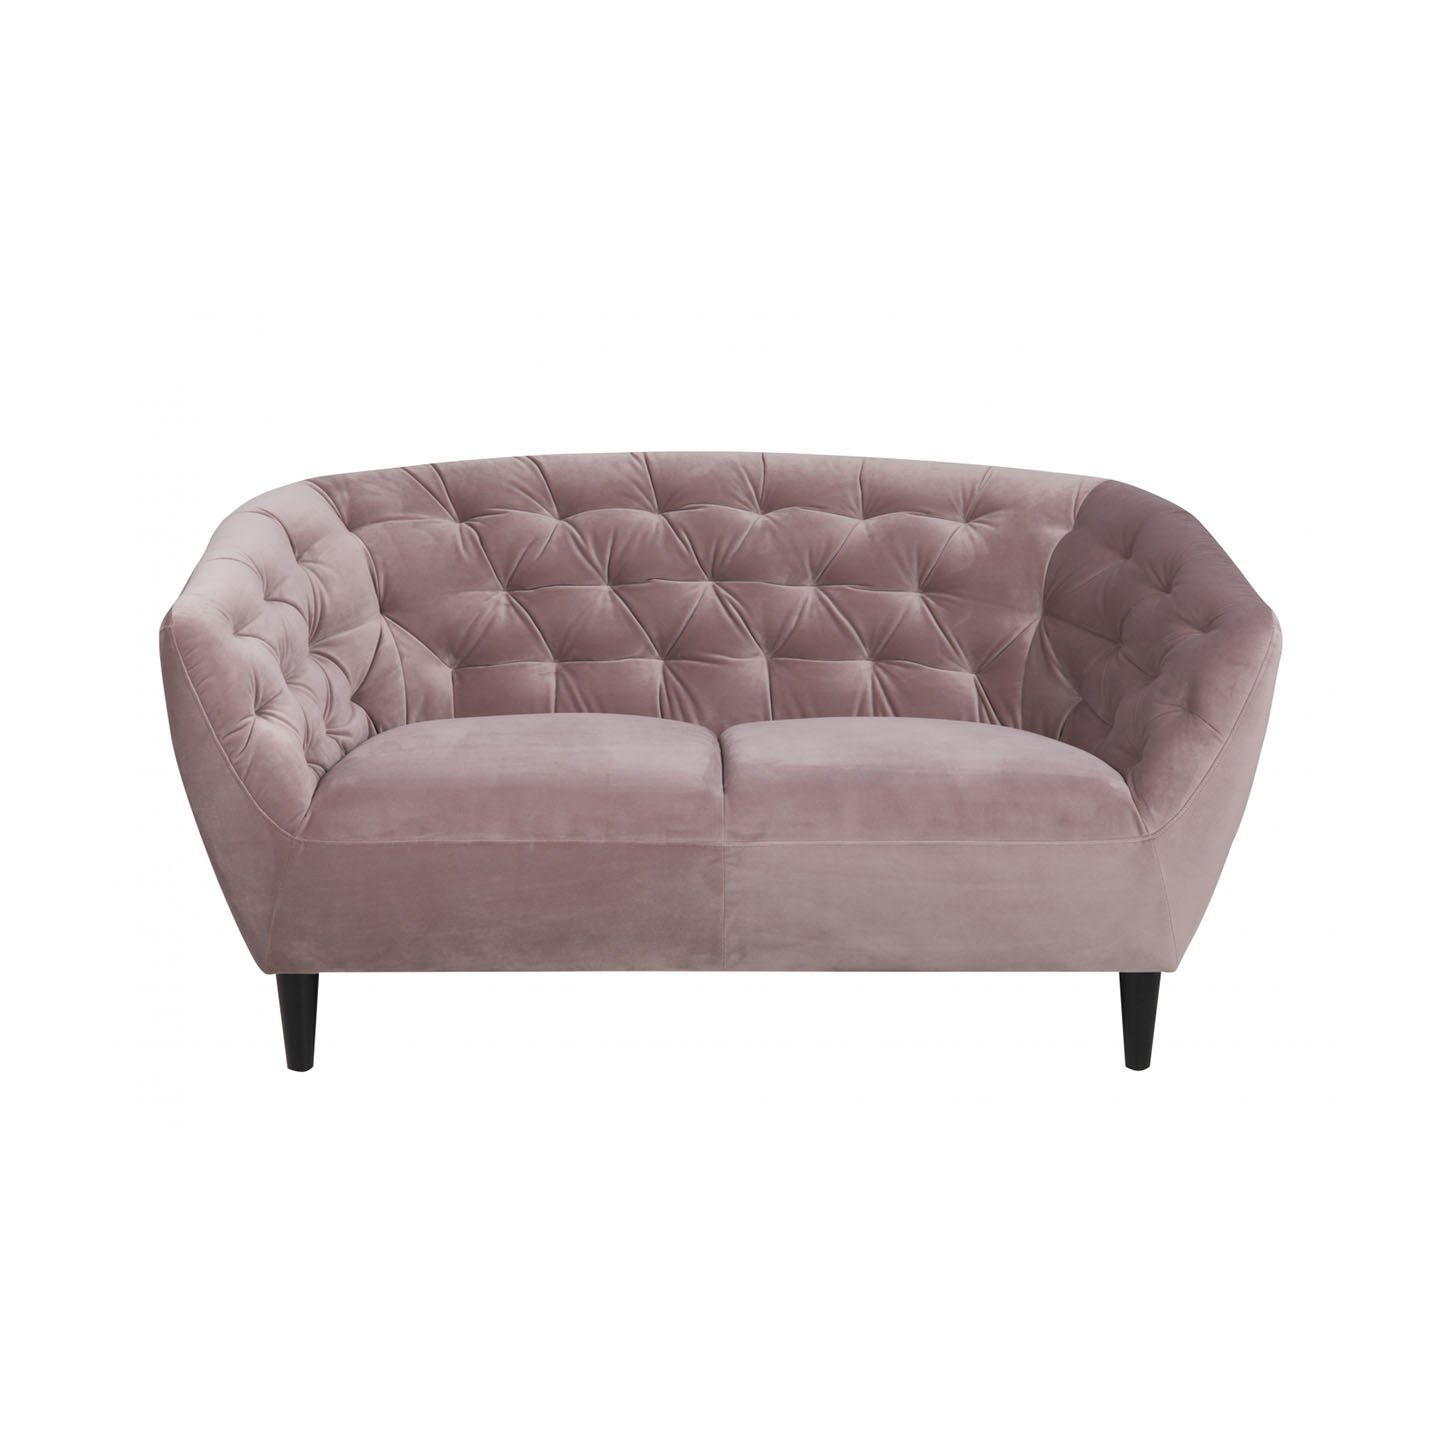 2 Personen mit rosa Teile Rian Beinen., ebuy24 schwarzen 1 Sofa Sofa